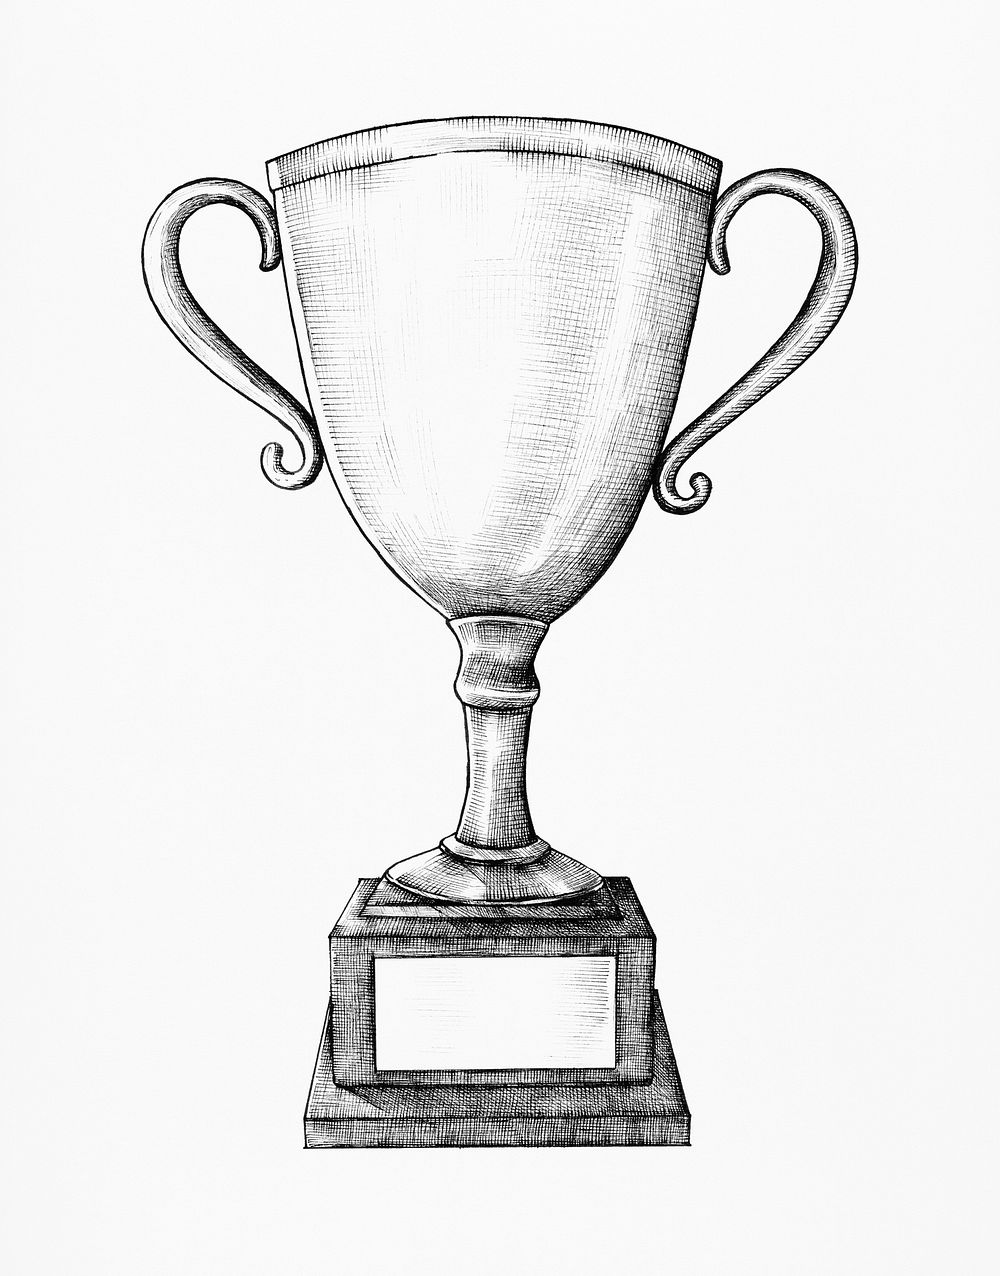 Hand drawn silver trophy illustration